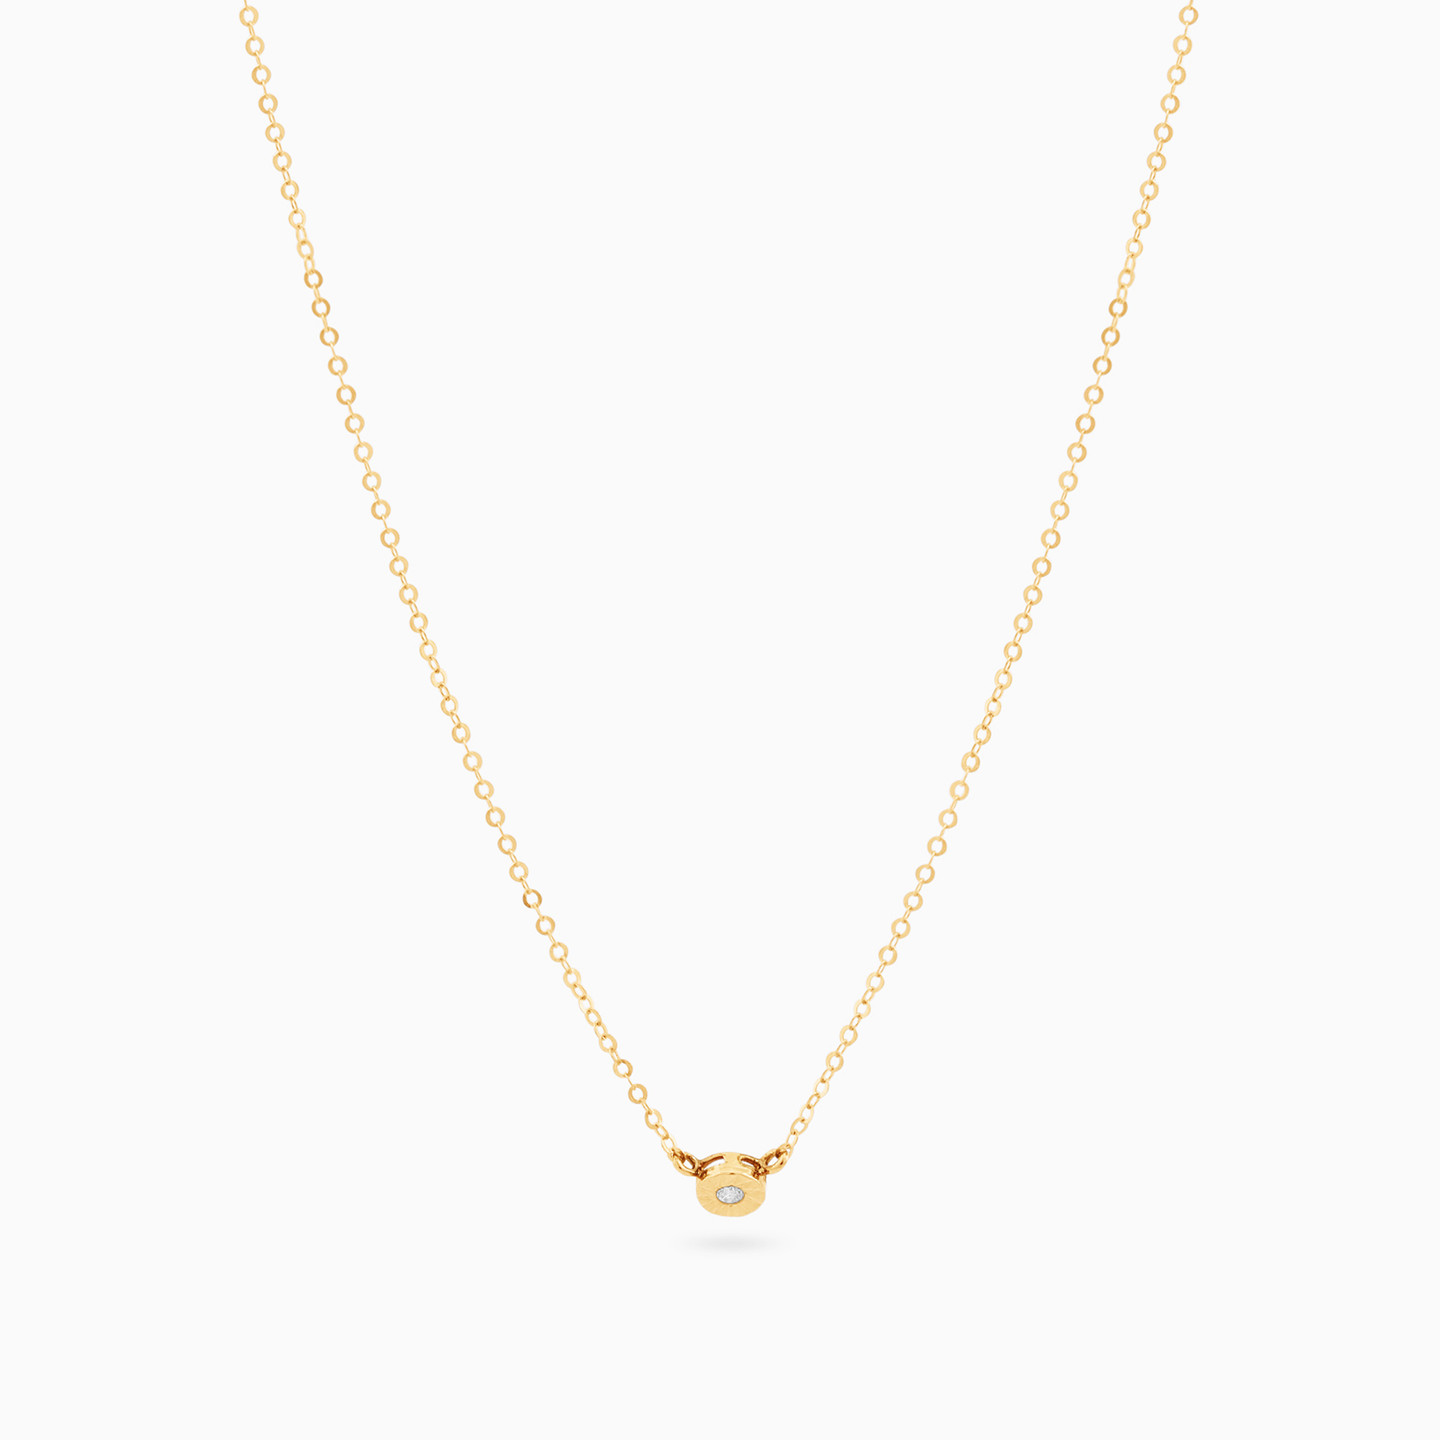 18K Gold Cubic Zirconia Pendant Necklace - 3